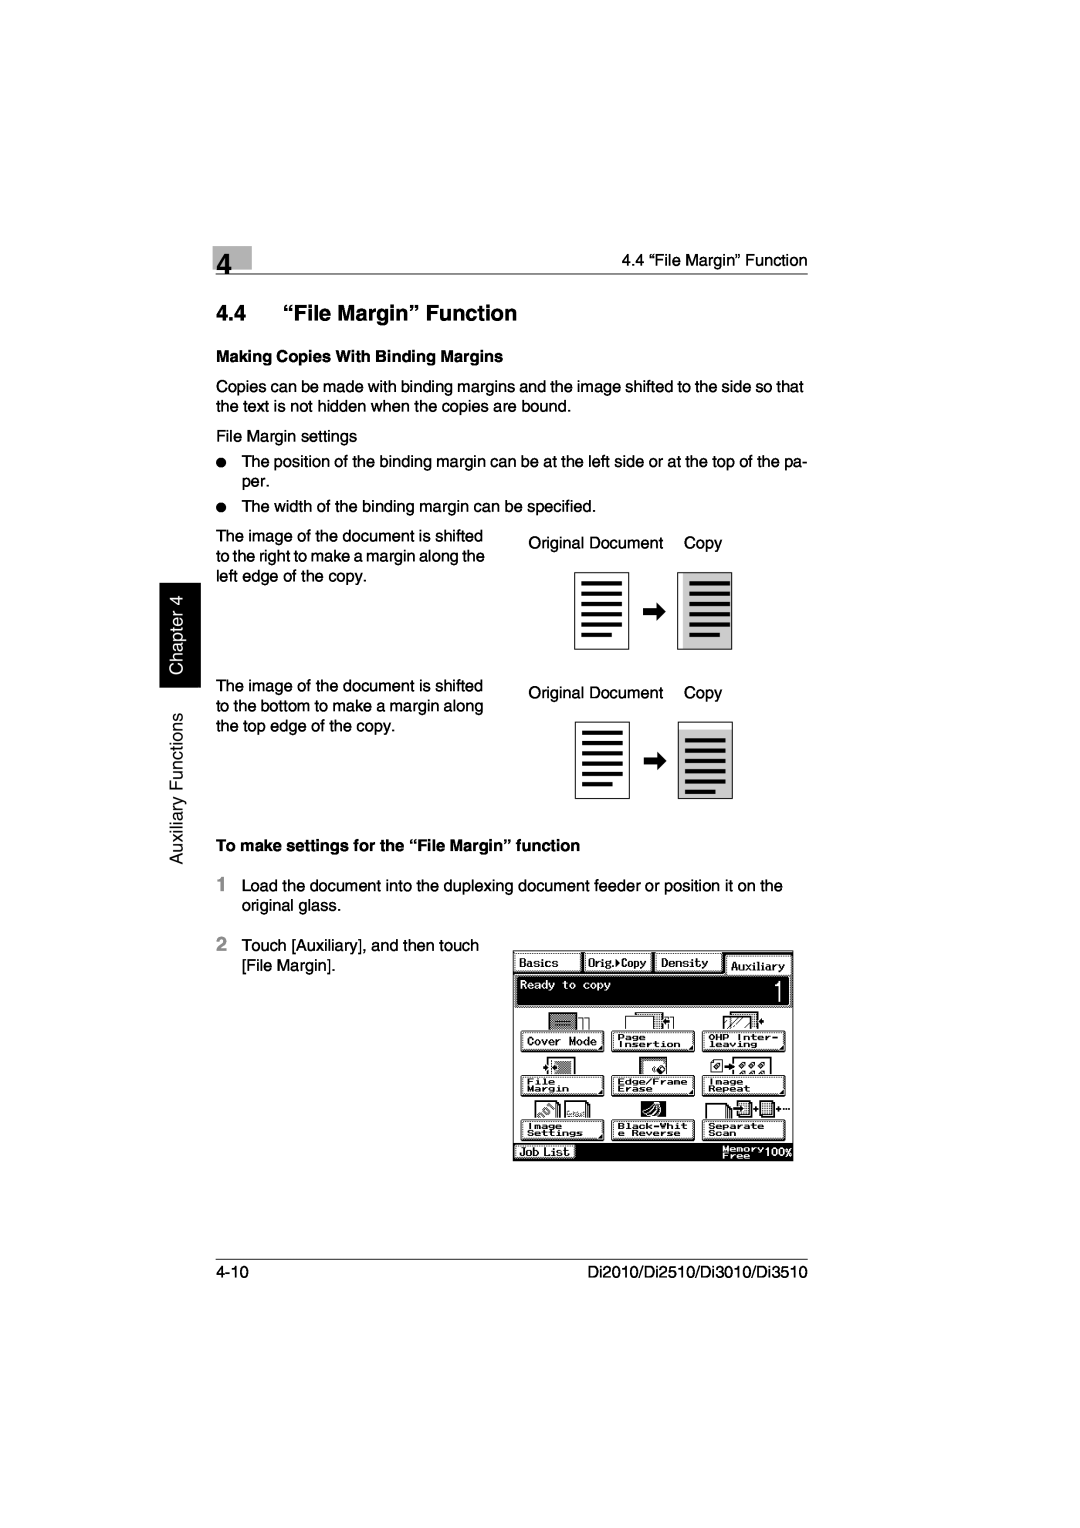 Minolta Di3510, DI2510, DI2010 4.4 “File Margin” Function, Auxiliary Functions Chapter, Making Copies With Binding Margins 